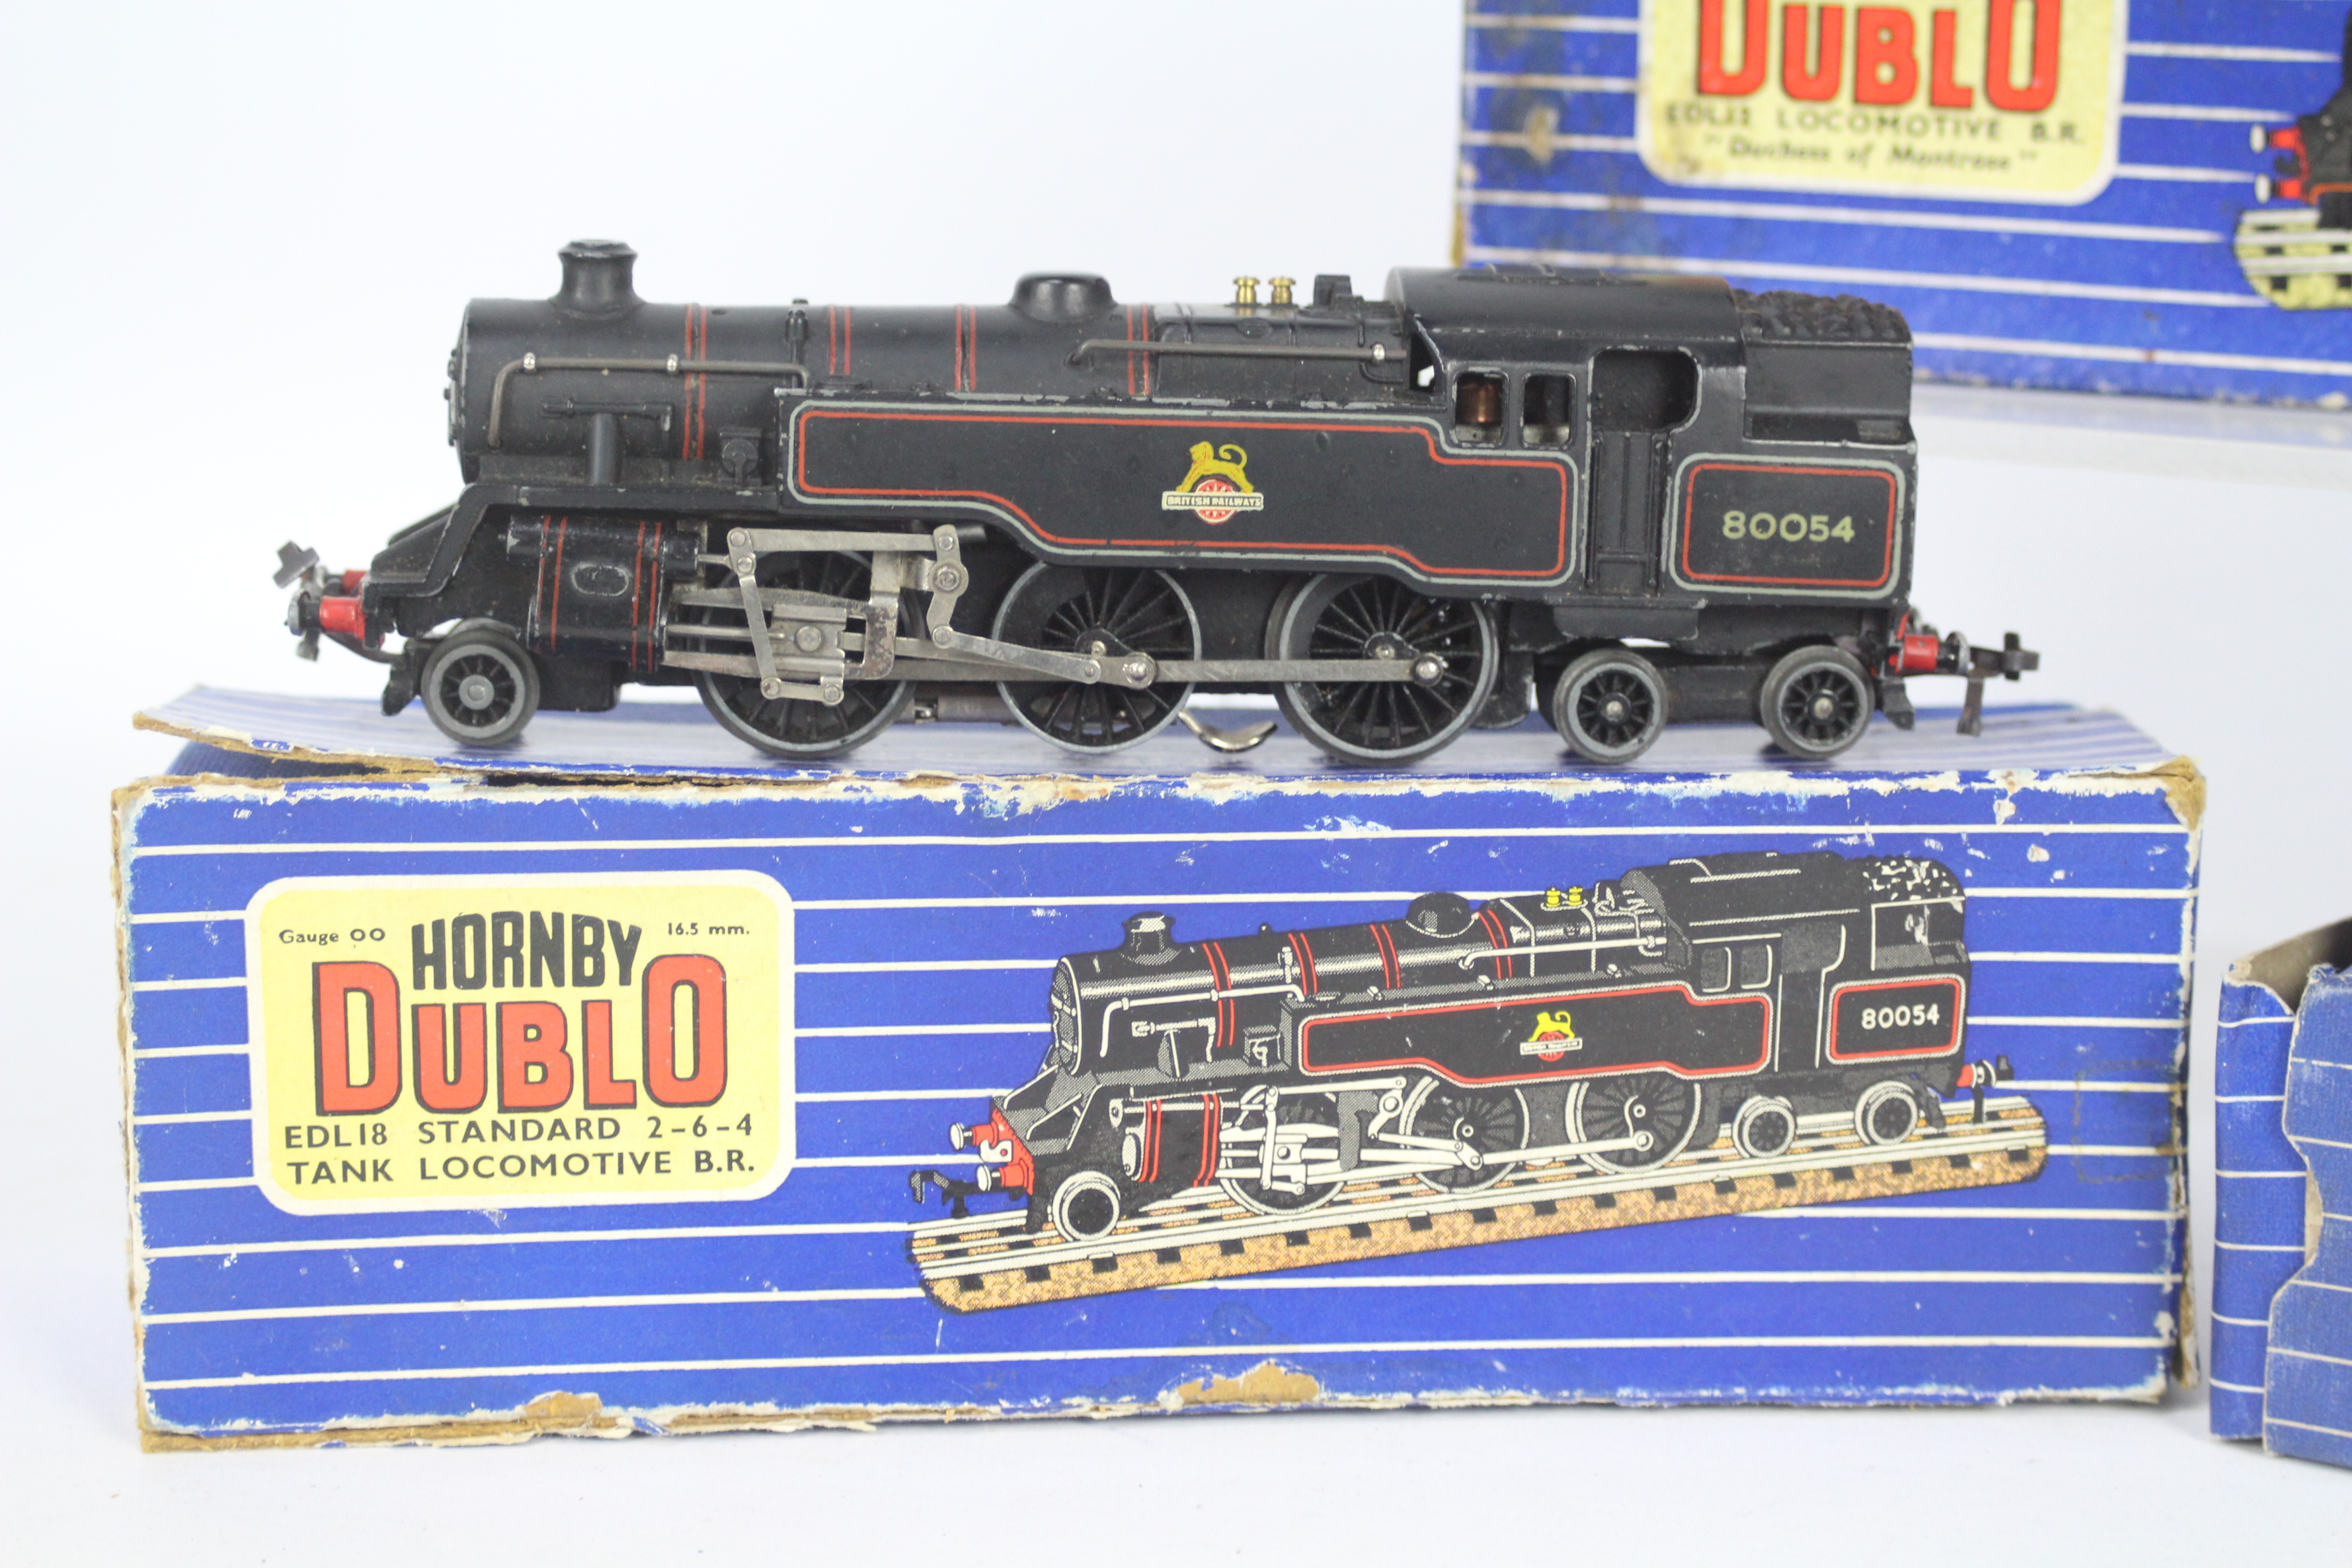 Hornby Dublo - Two boxed Hornby Dublo locomotives. - Image 2 of 4